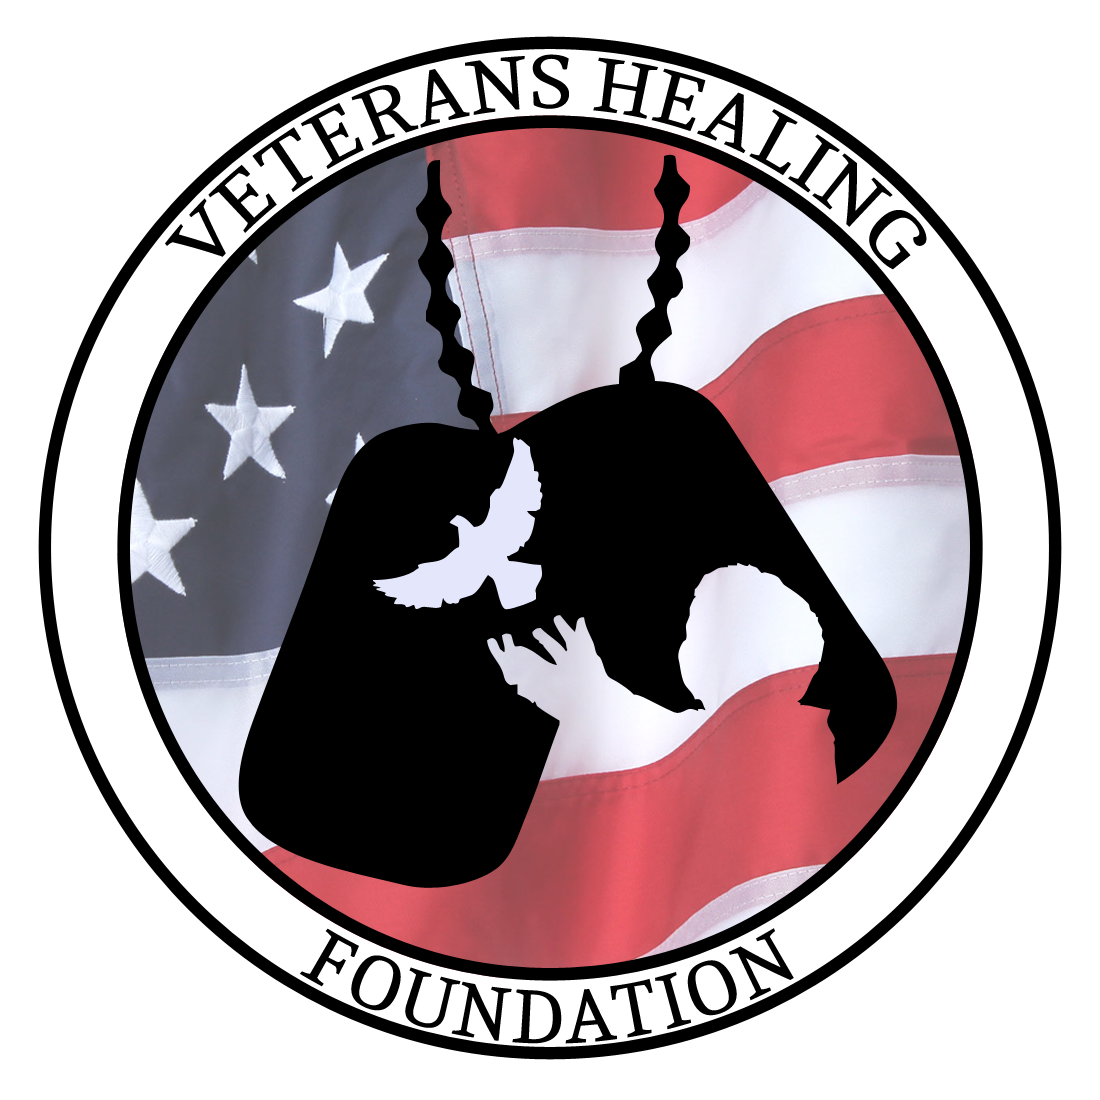 The Veterans Healing Foundation logo